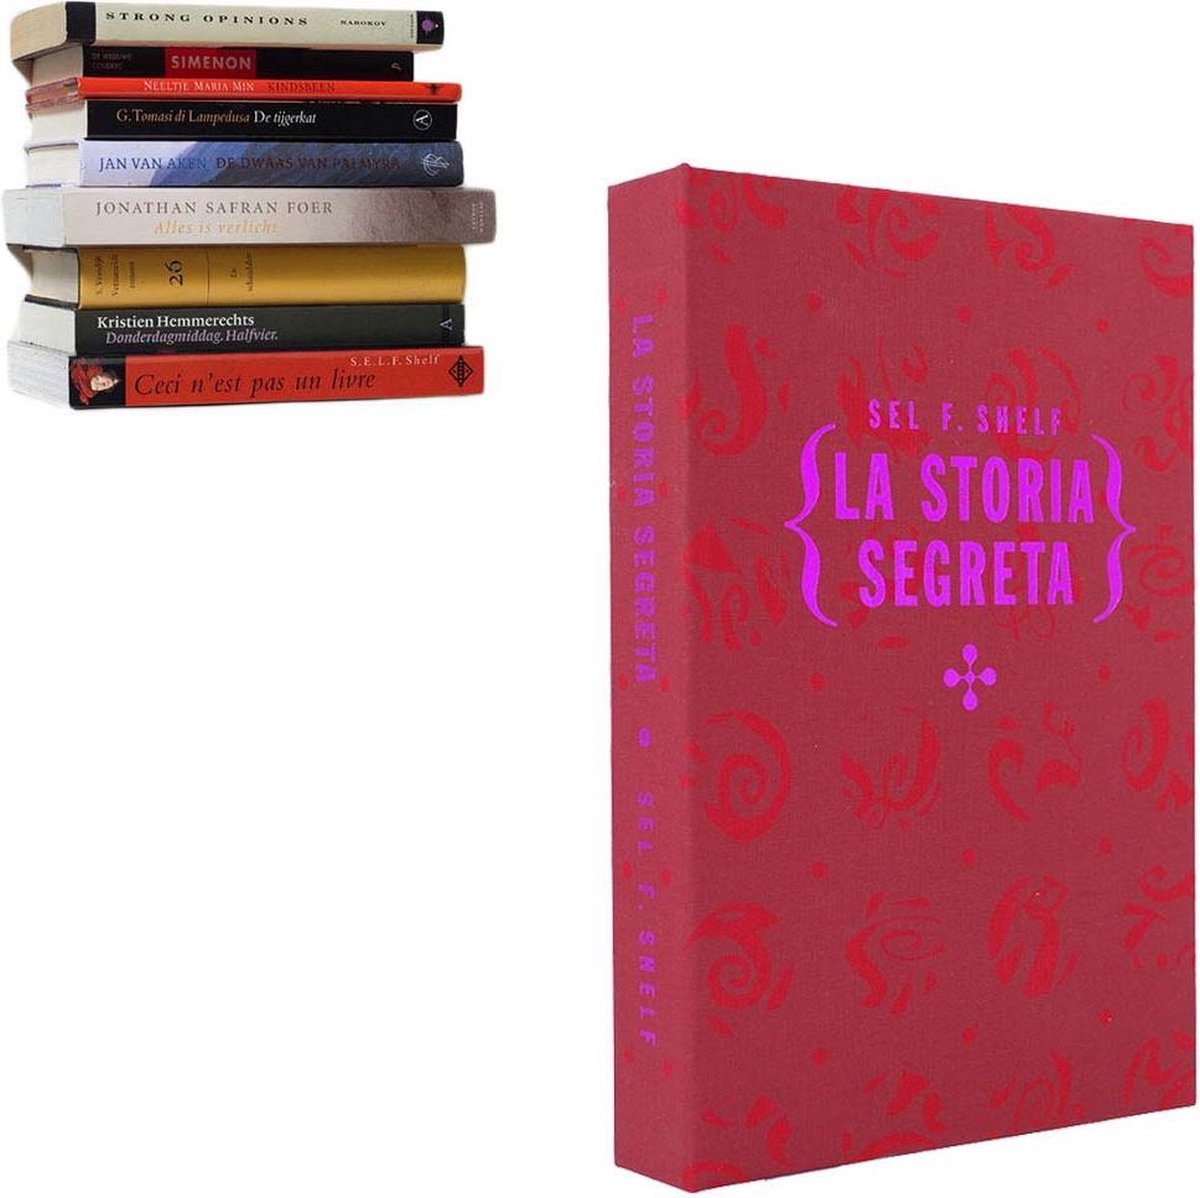 Selfshelf - Zwevende boekenplank - Linnen - Rood - tekst La storia segreta - L 22,5 x B 15,5 x H 3,5 cm